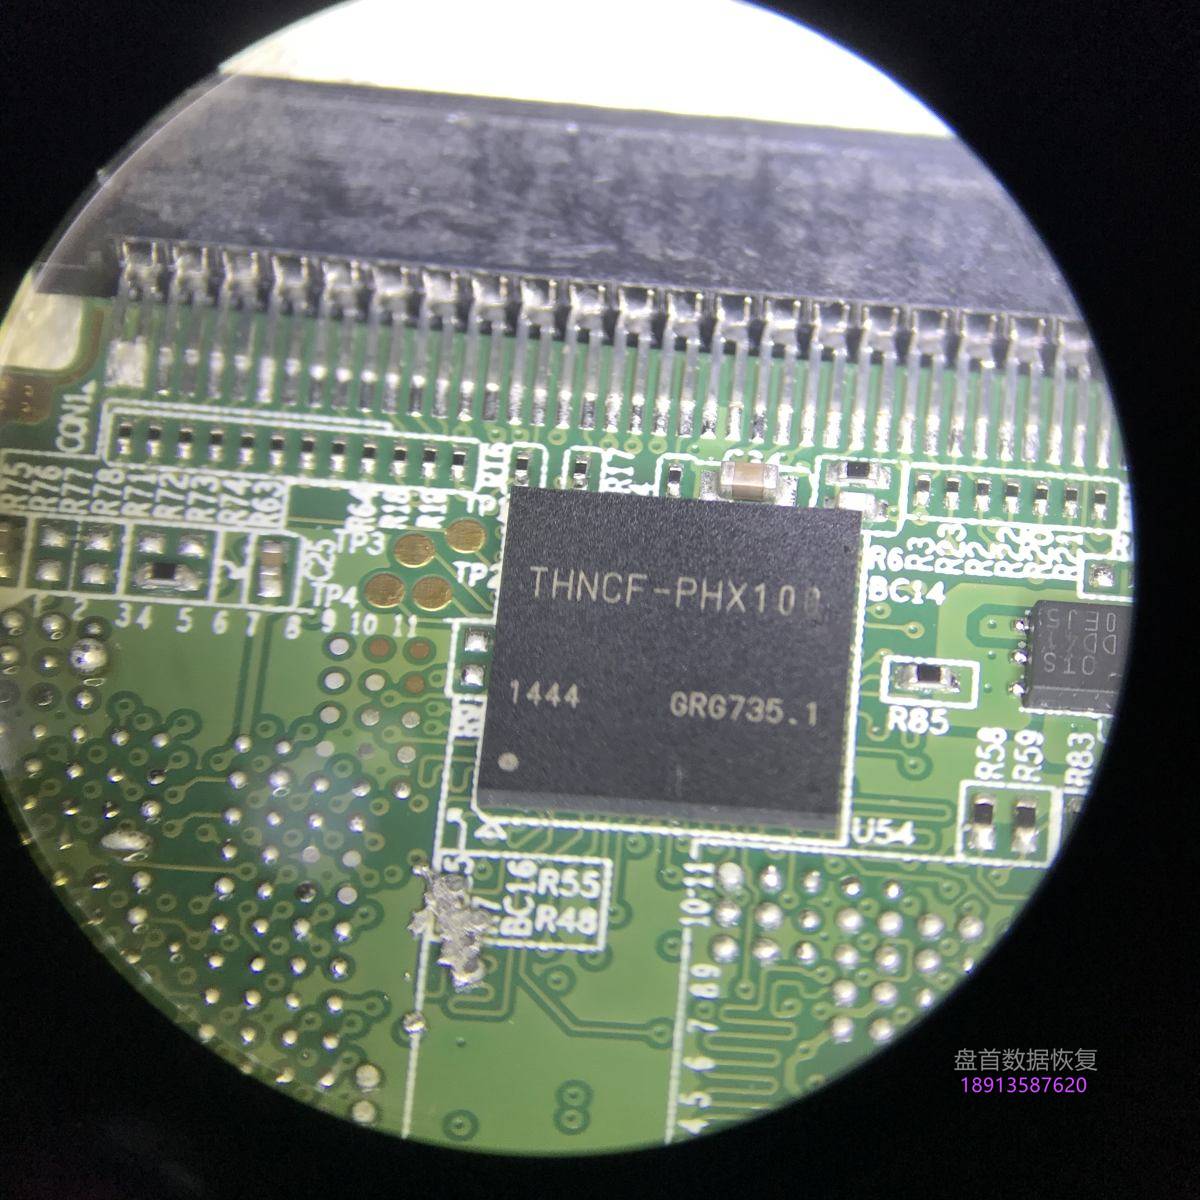 TOSHIBA 1000X相机CF卡打开提示需要将其格式化,磁盘管理显示32MB芯片级数据恢复成功